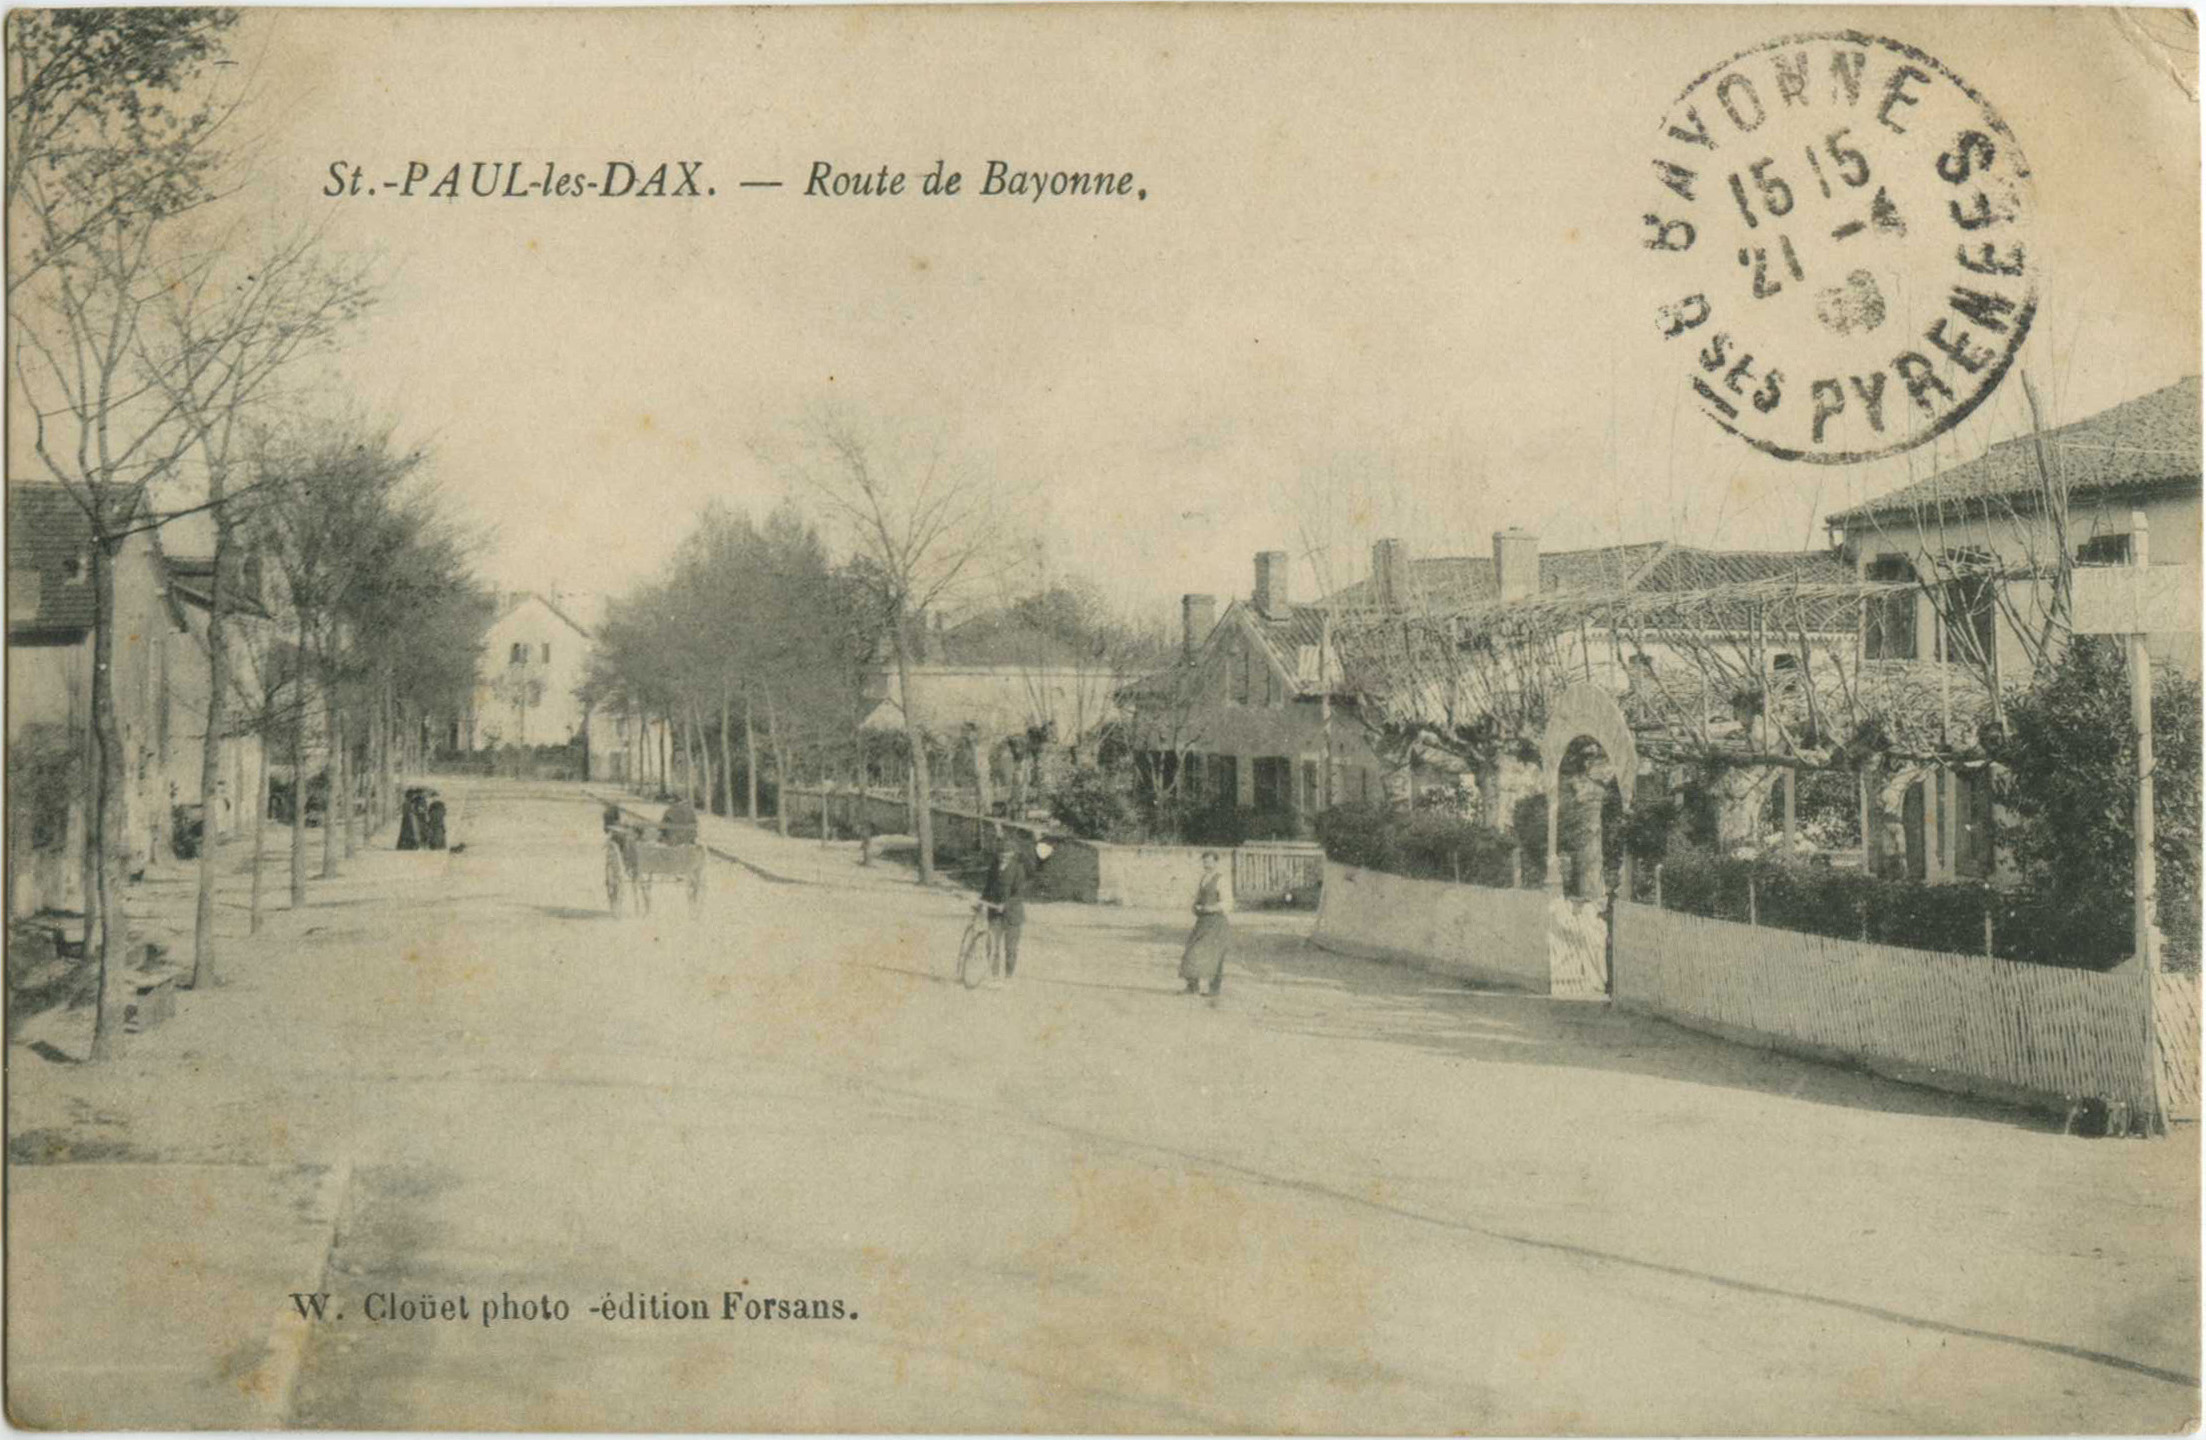 Saint-Paul-lès-Dax - Route de Bayonne